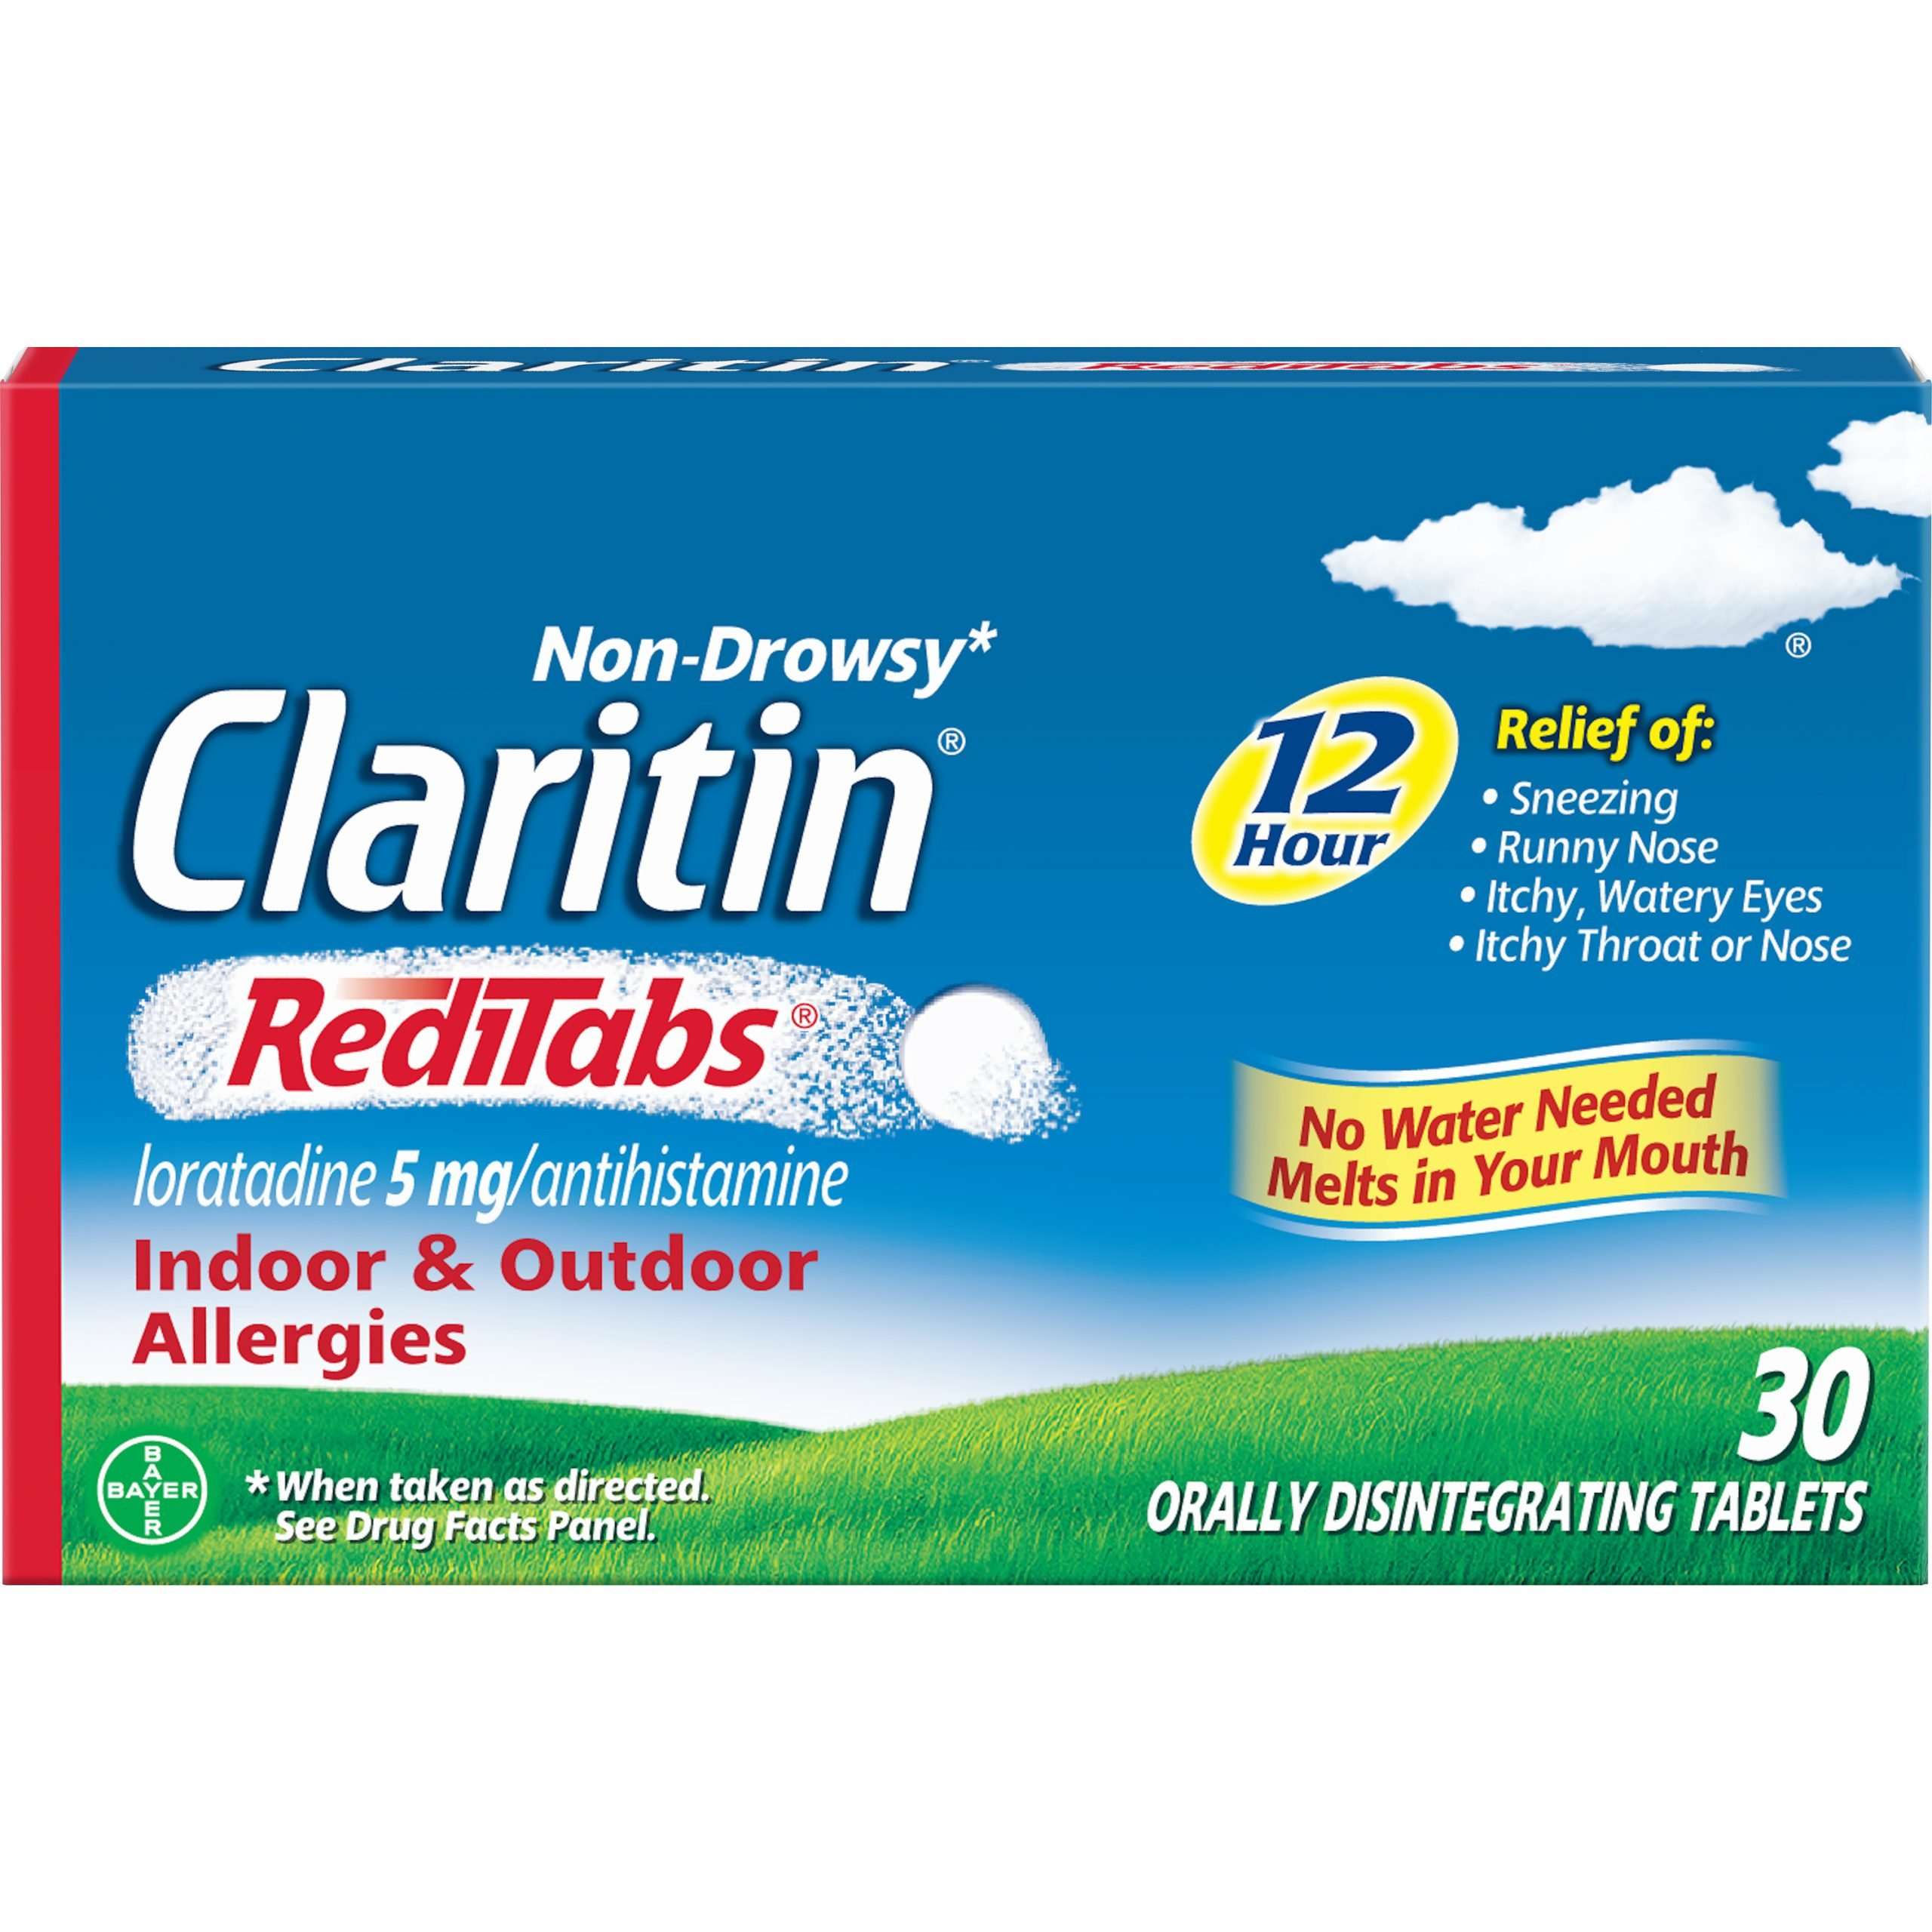 Claritin RediTabs 12 Hour Non